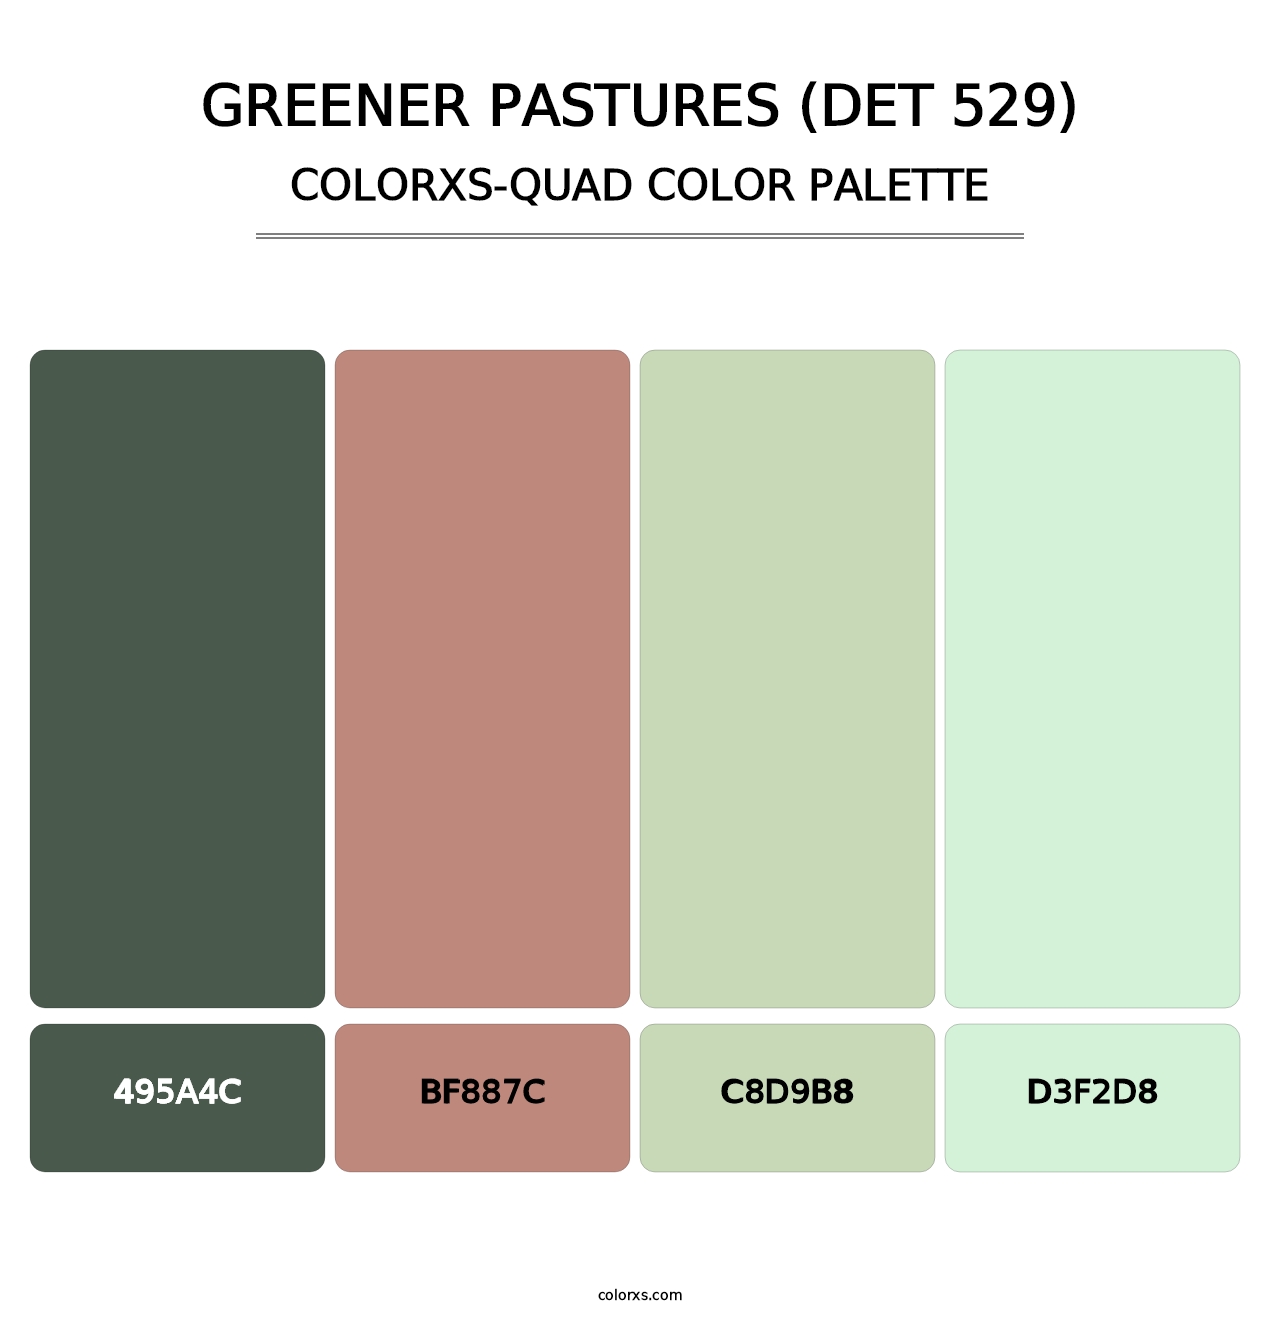 Greener Pastures (DET 529) - Colorxs Quad Palette